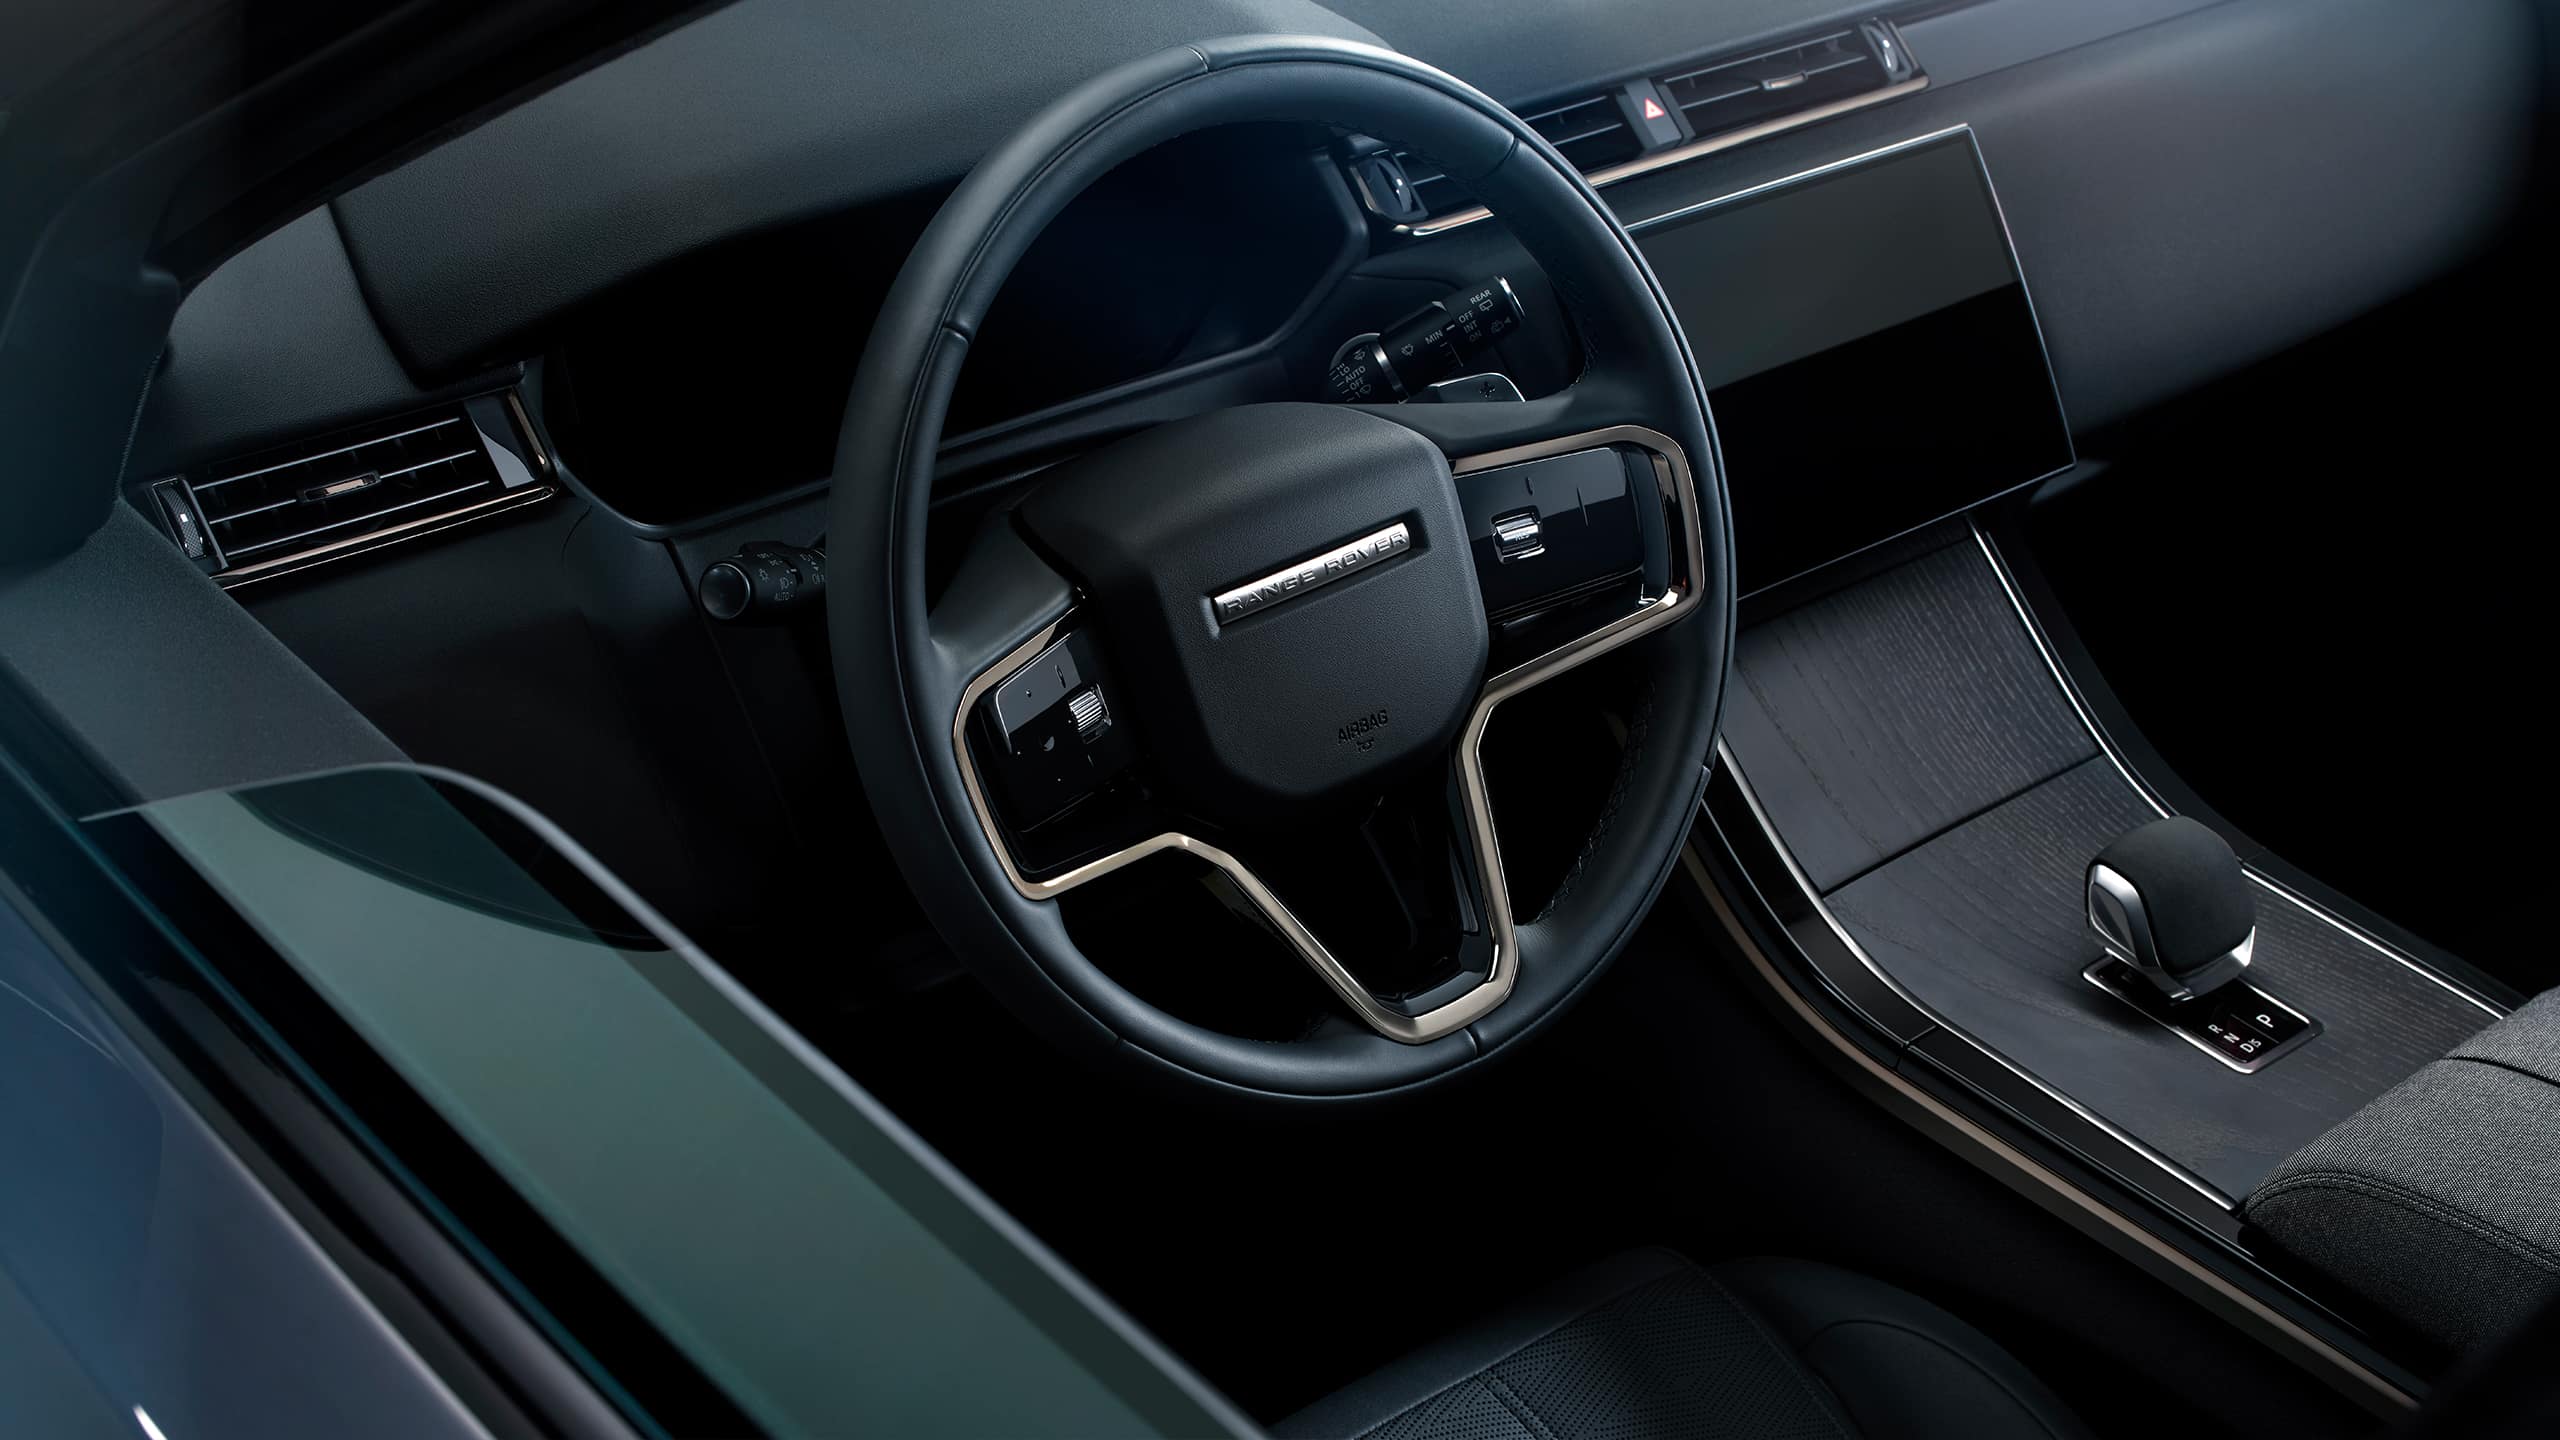  Interior steering wheel of Range Rover Velar